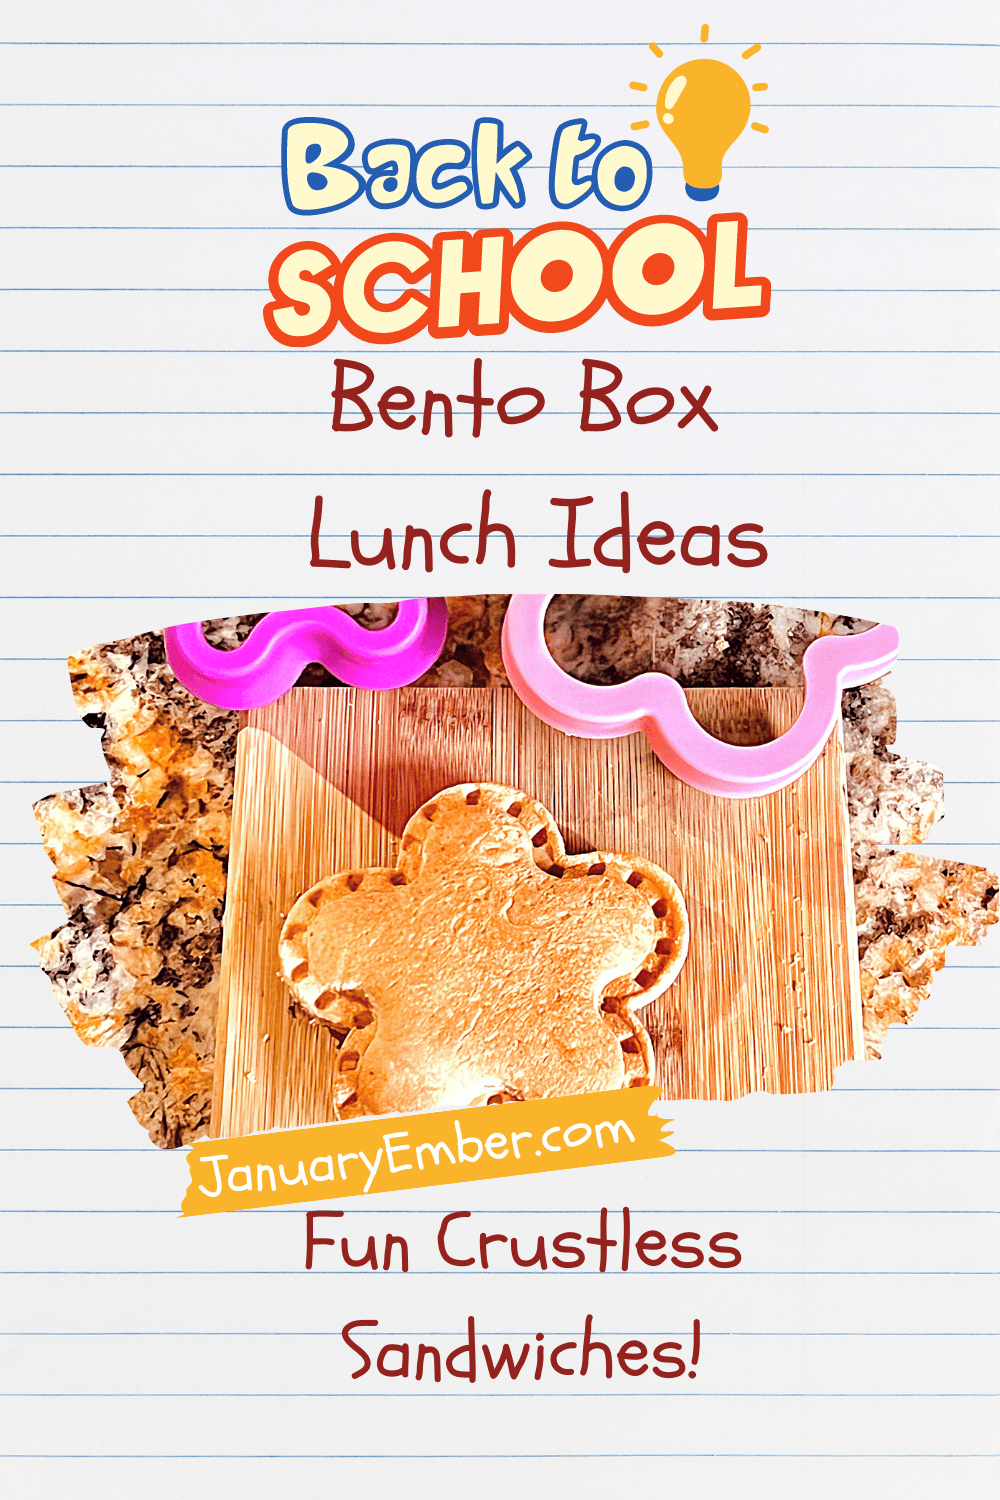 Bento Box Lunch